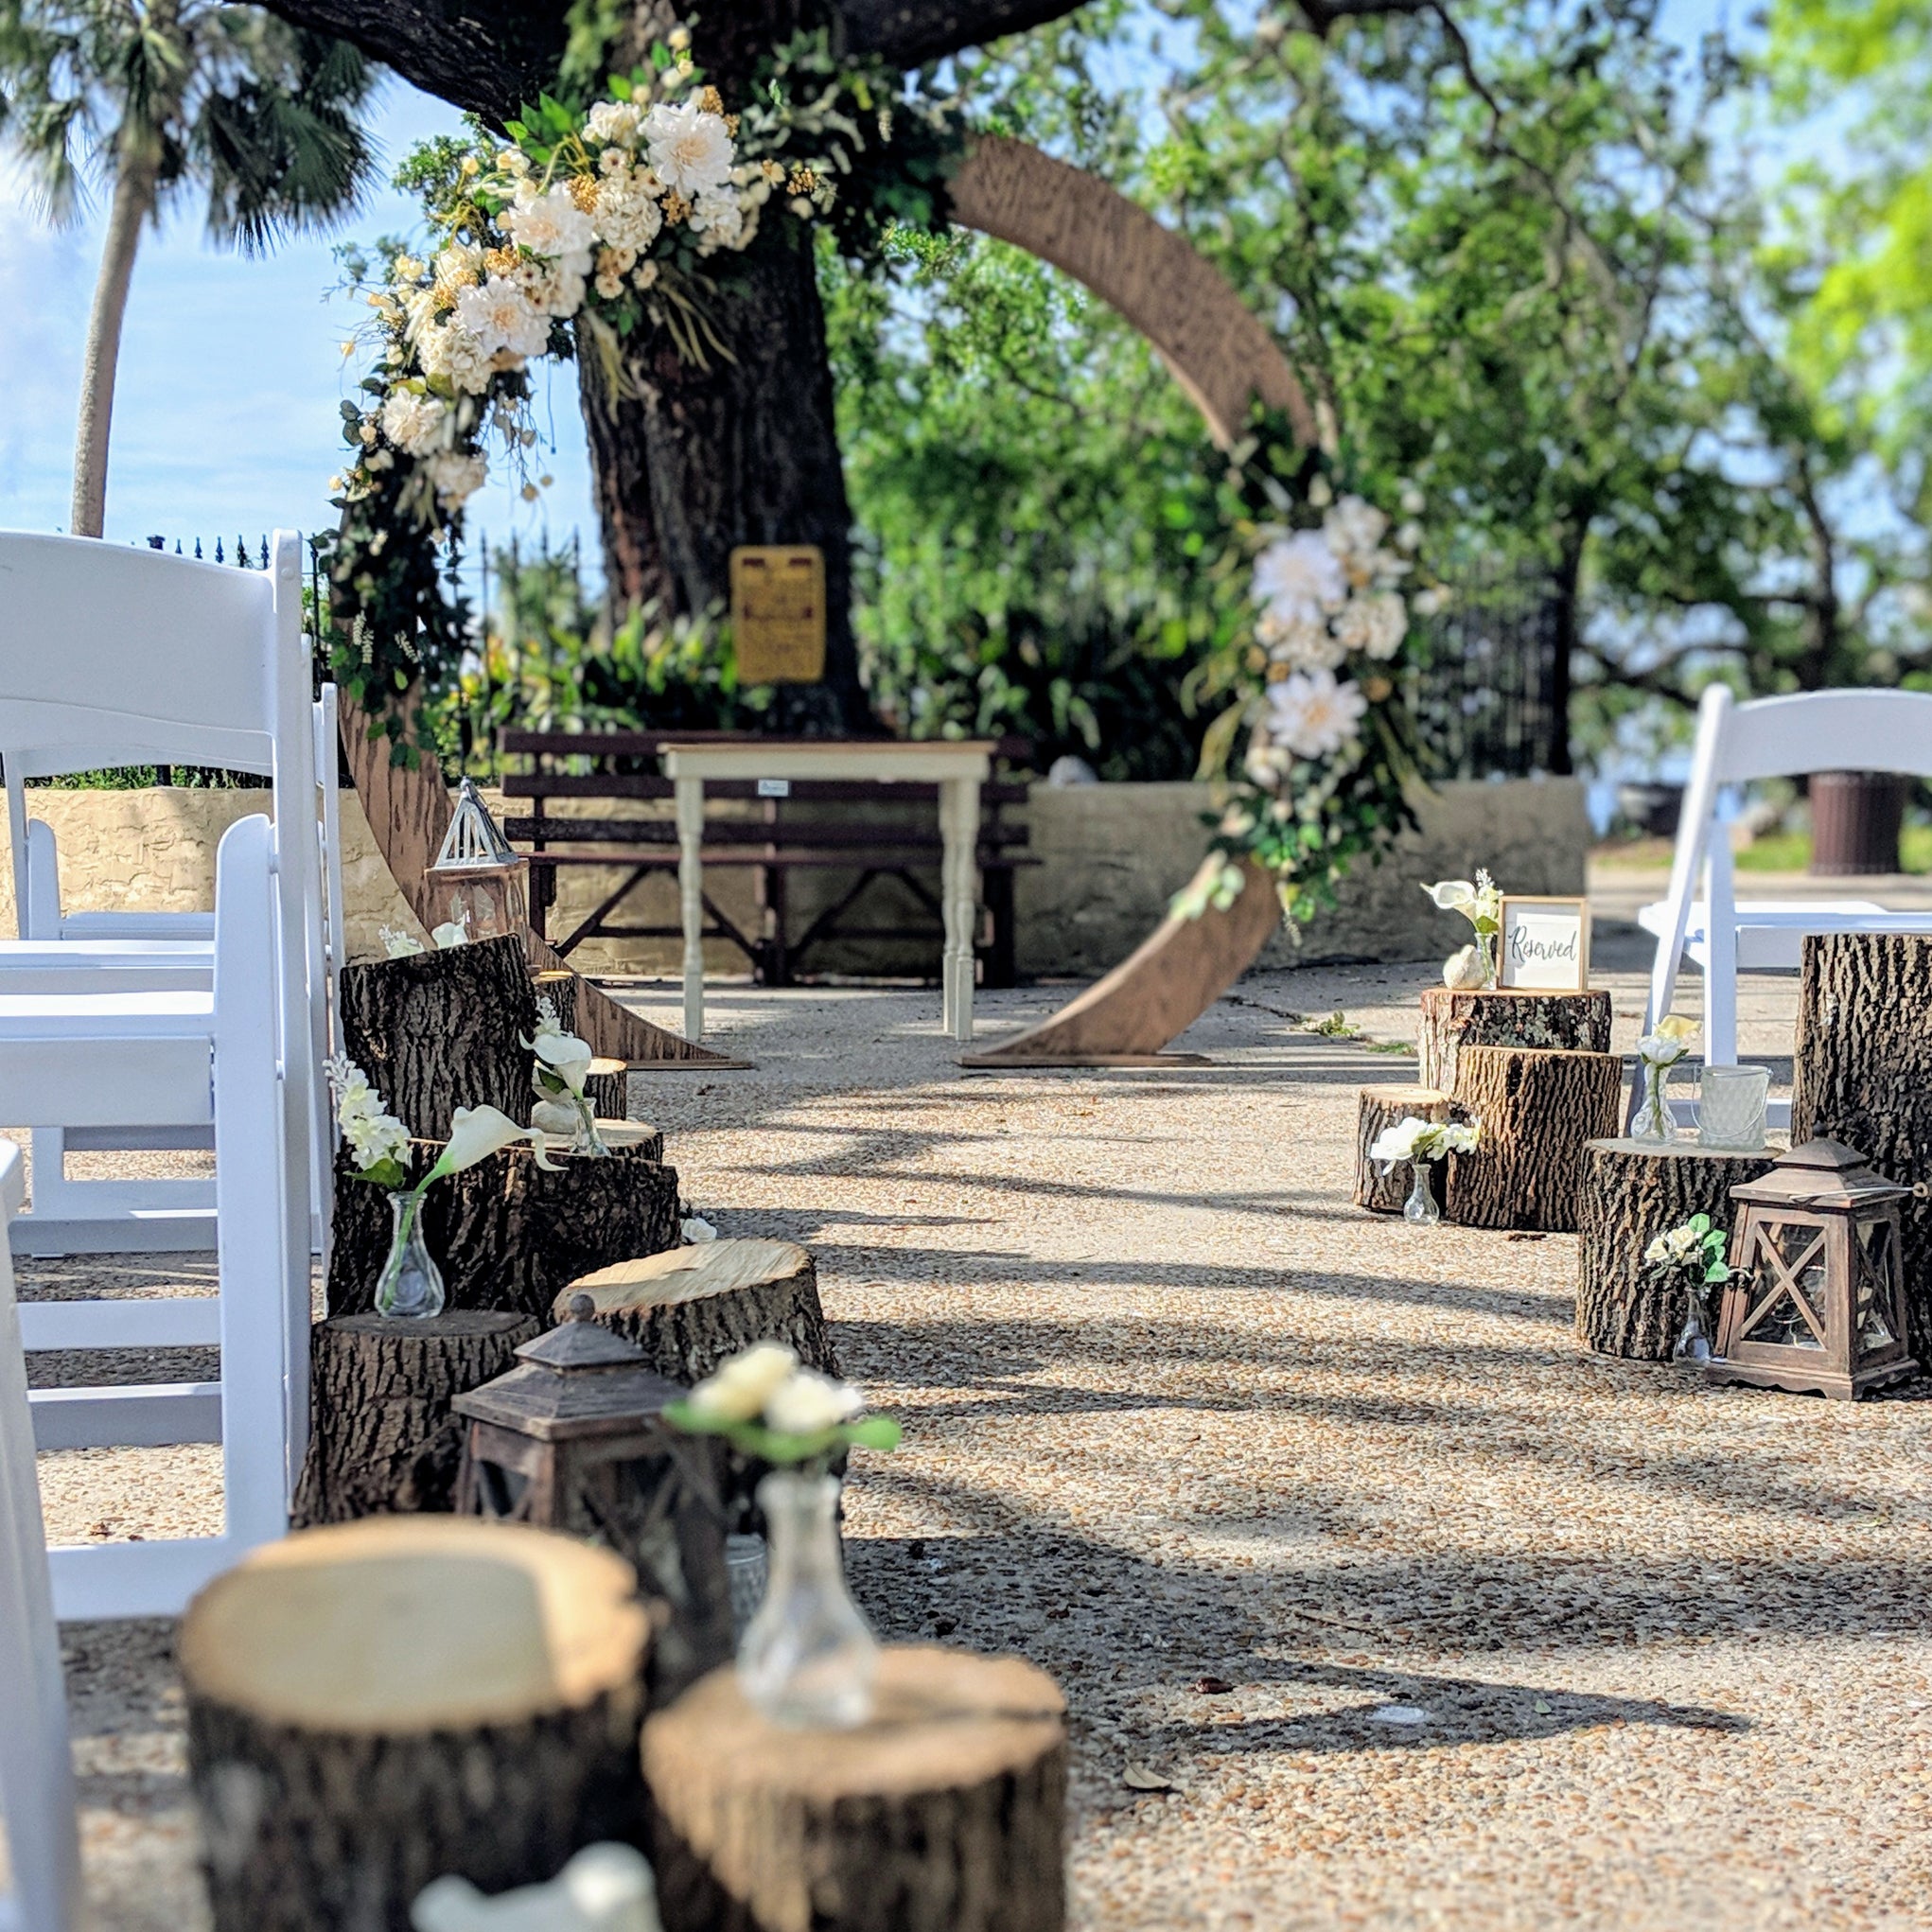 wood circle moon gate wedding arch arbor beach wedding rental in panama city beach with log stump aisle markers